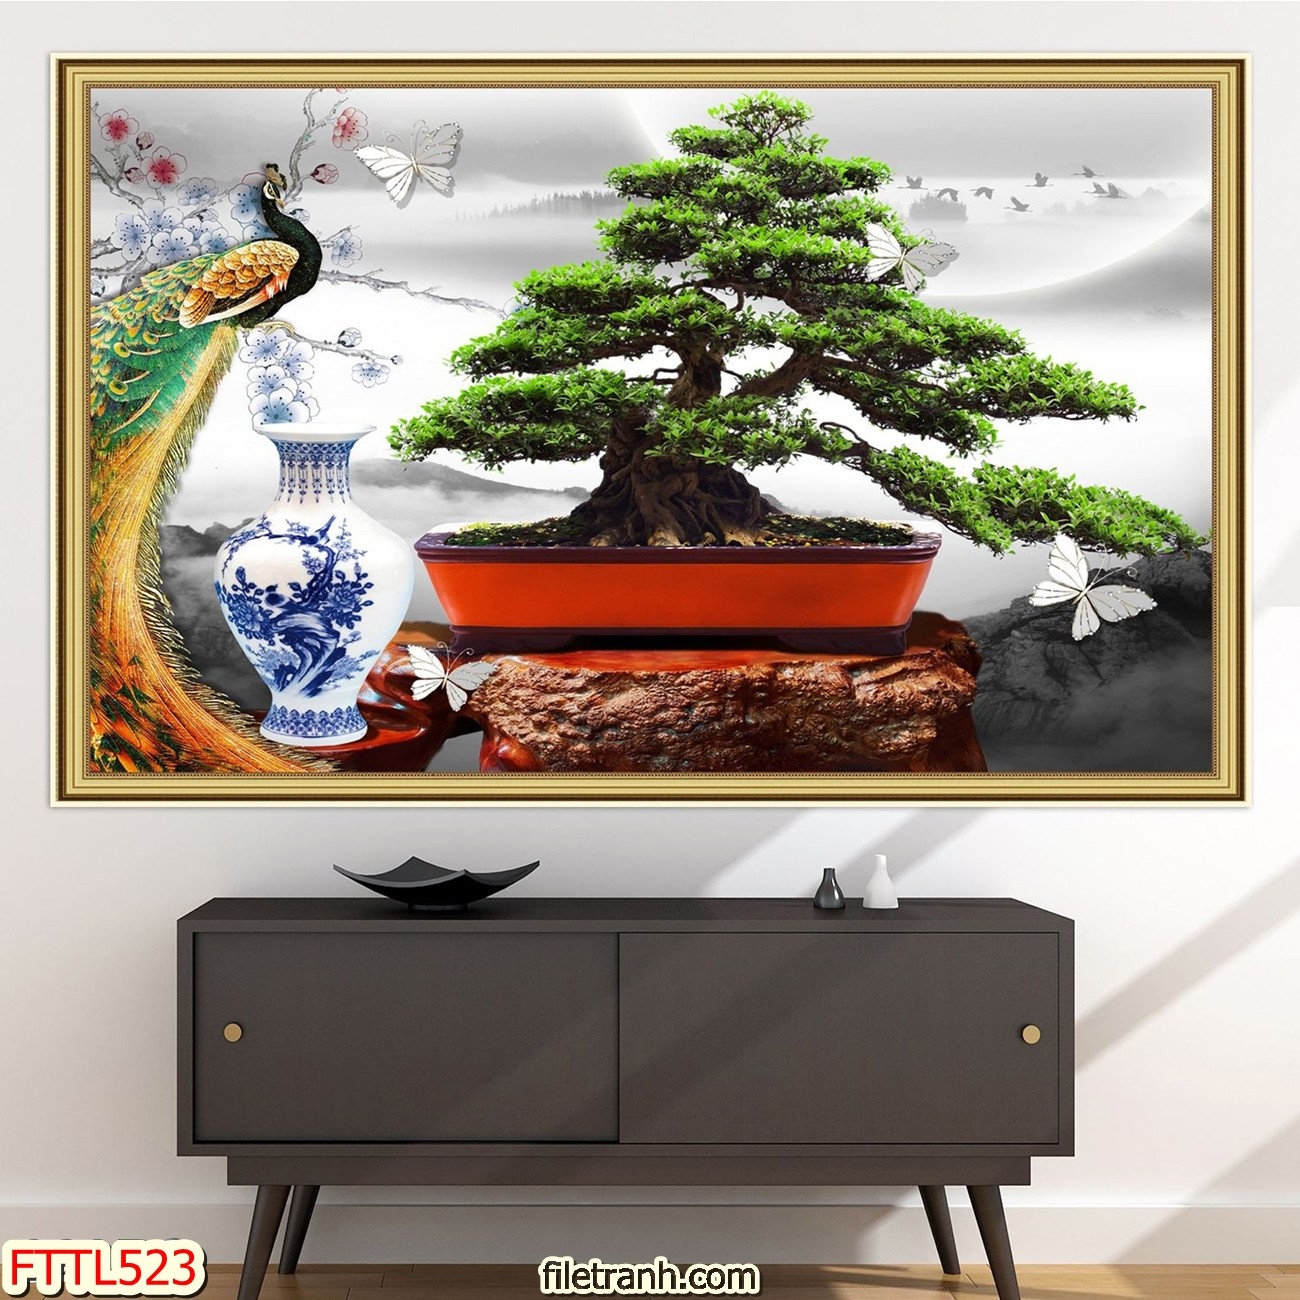 https://filetranh.com/file-tranh-chau-mai-bonsai/file-tranh-chau-mai-bonsai-fttl523.html